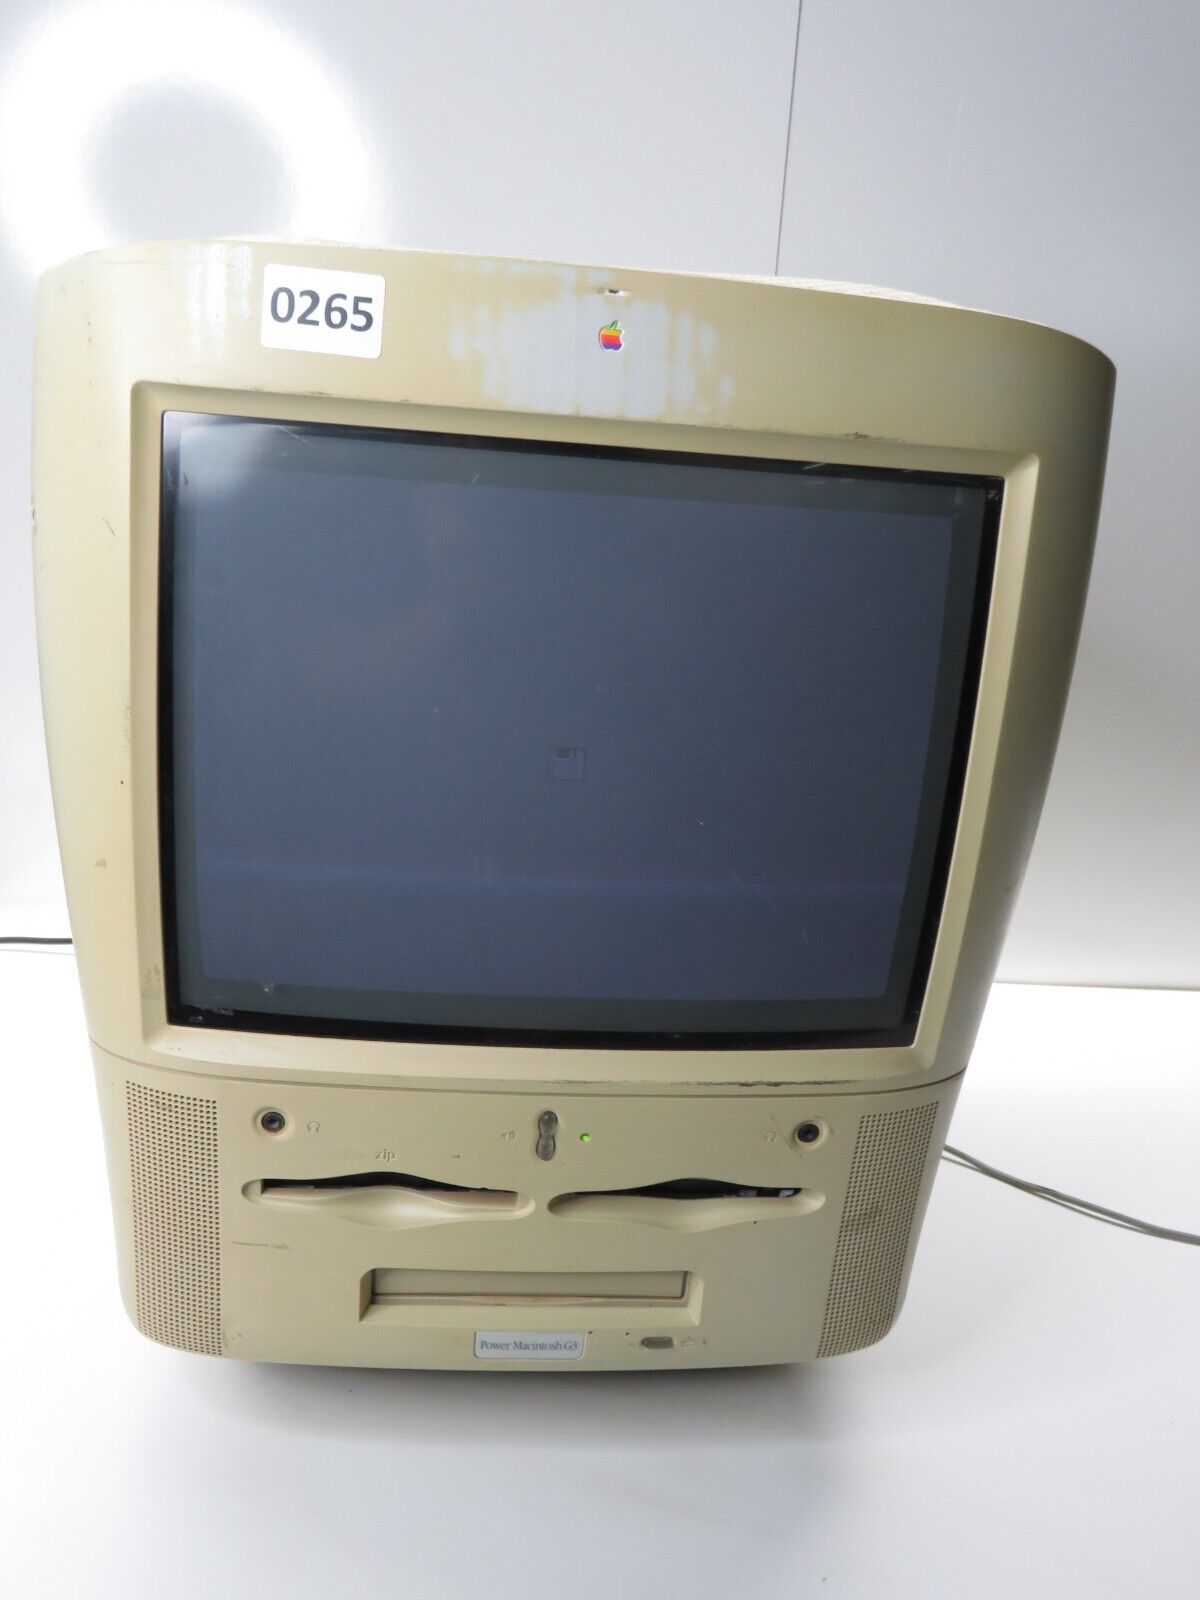 Apple M4787 Power Macintosh G3 Molar Mac PPC G3 266MHz 32MB Ram - Parts/Repair